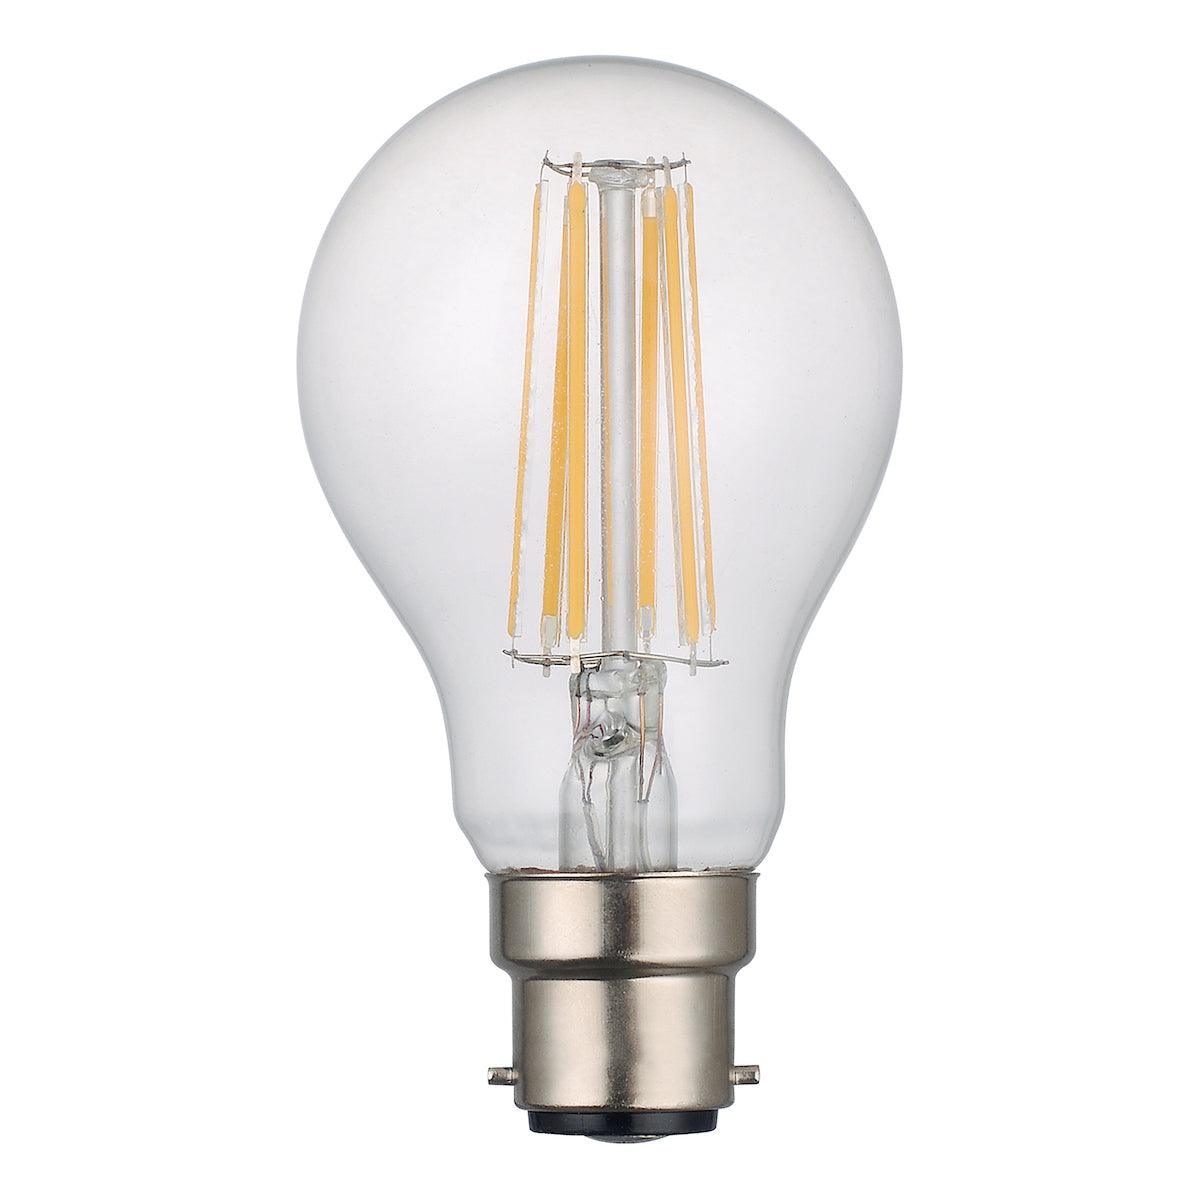 B22 LED DIM GLS LAMP 8W 950LM CLEAR - Peter Murphy Lighting & Electrical Ltd